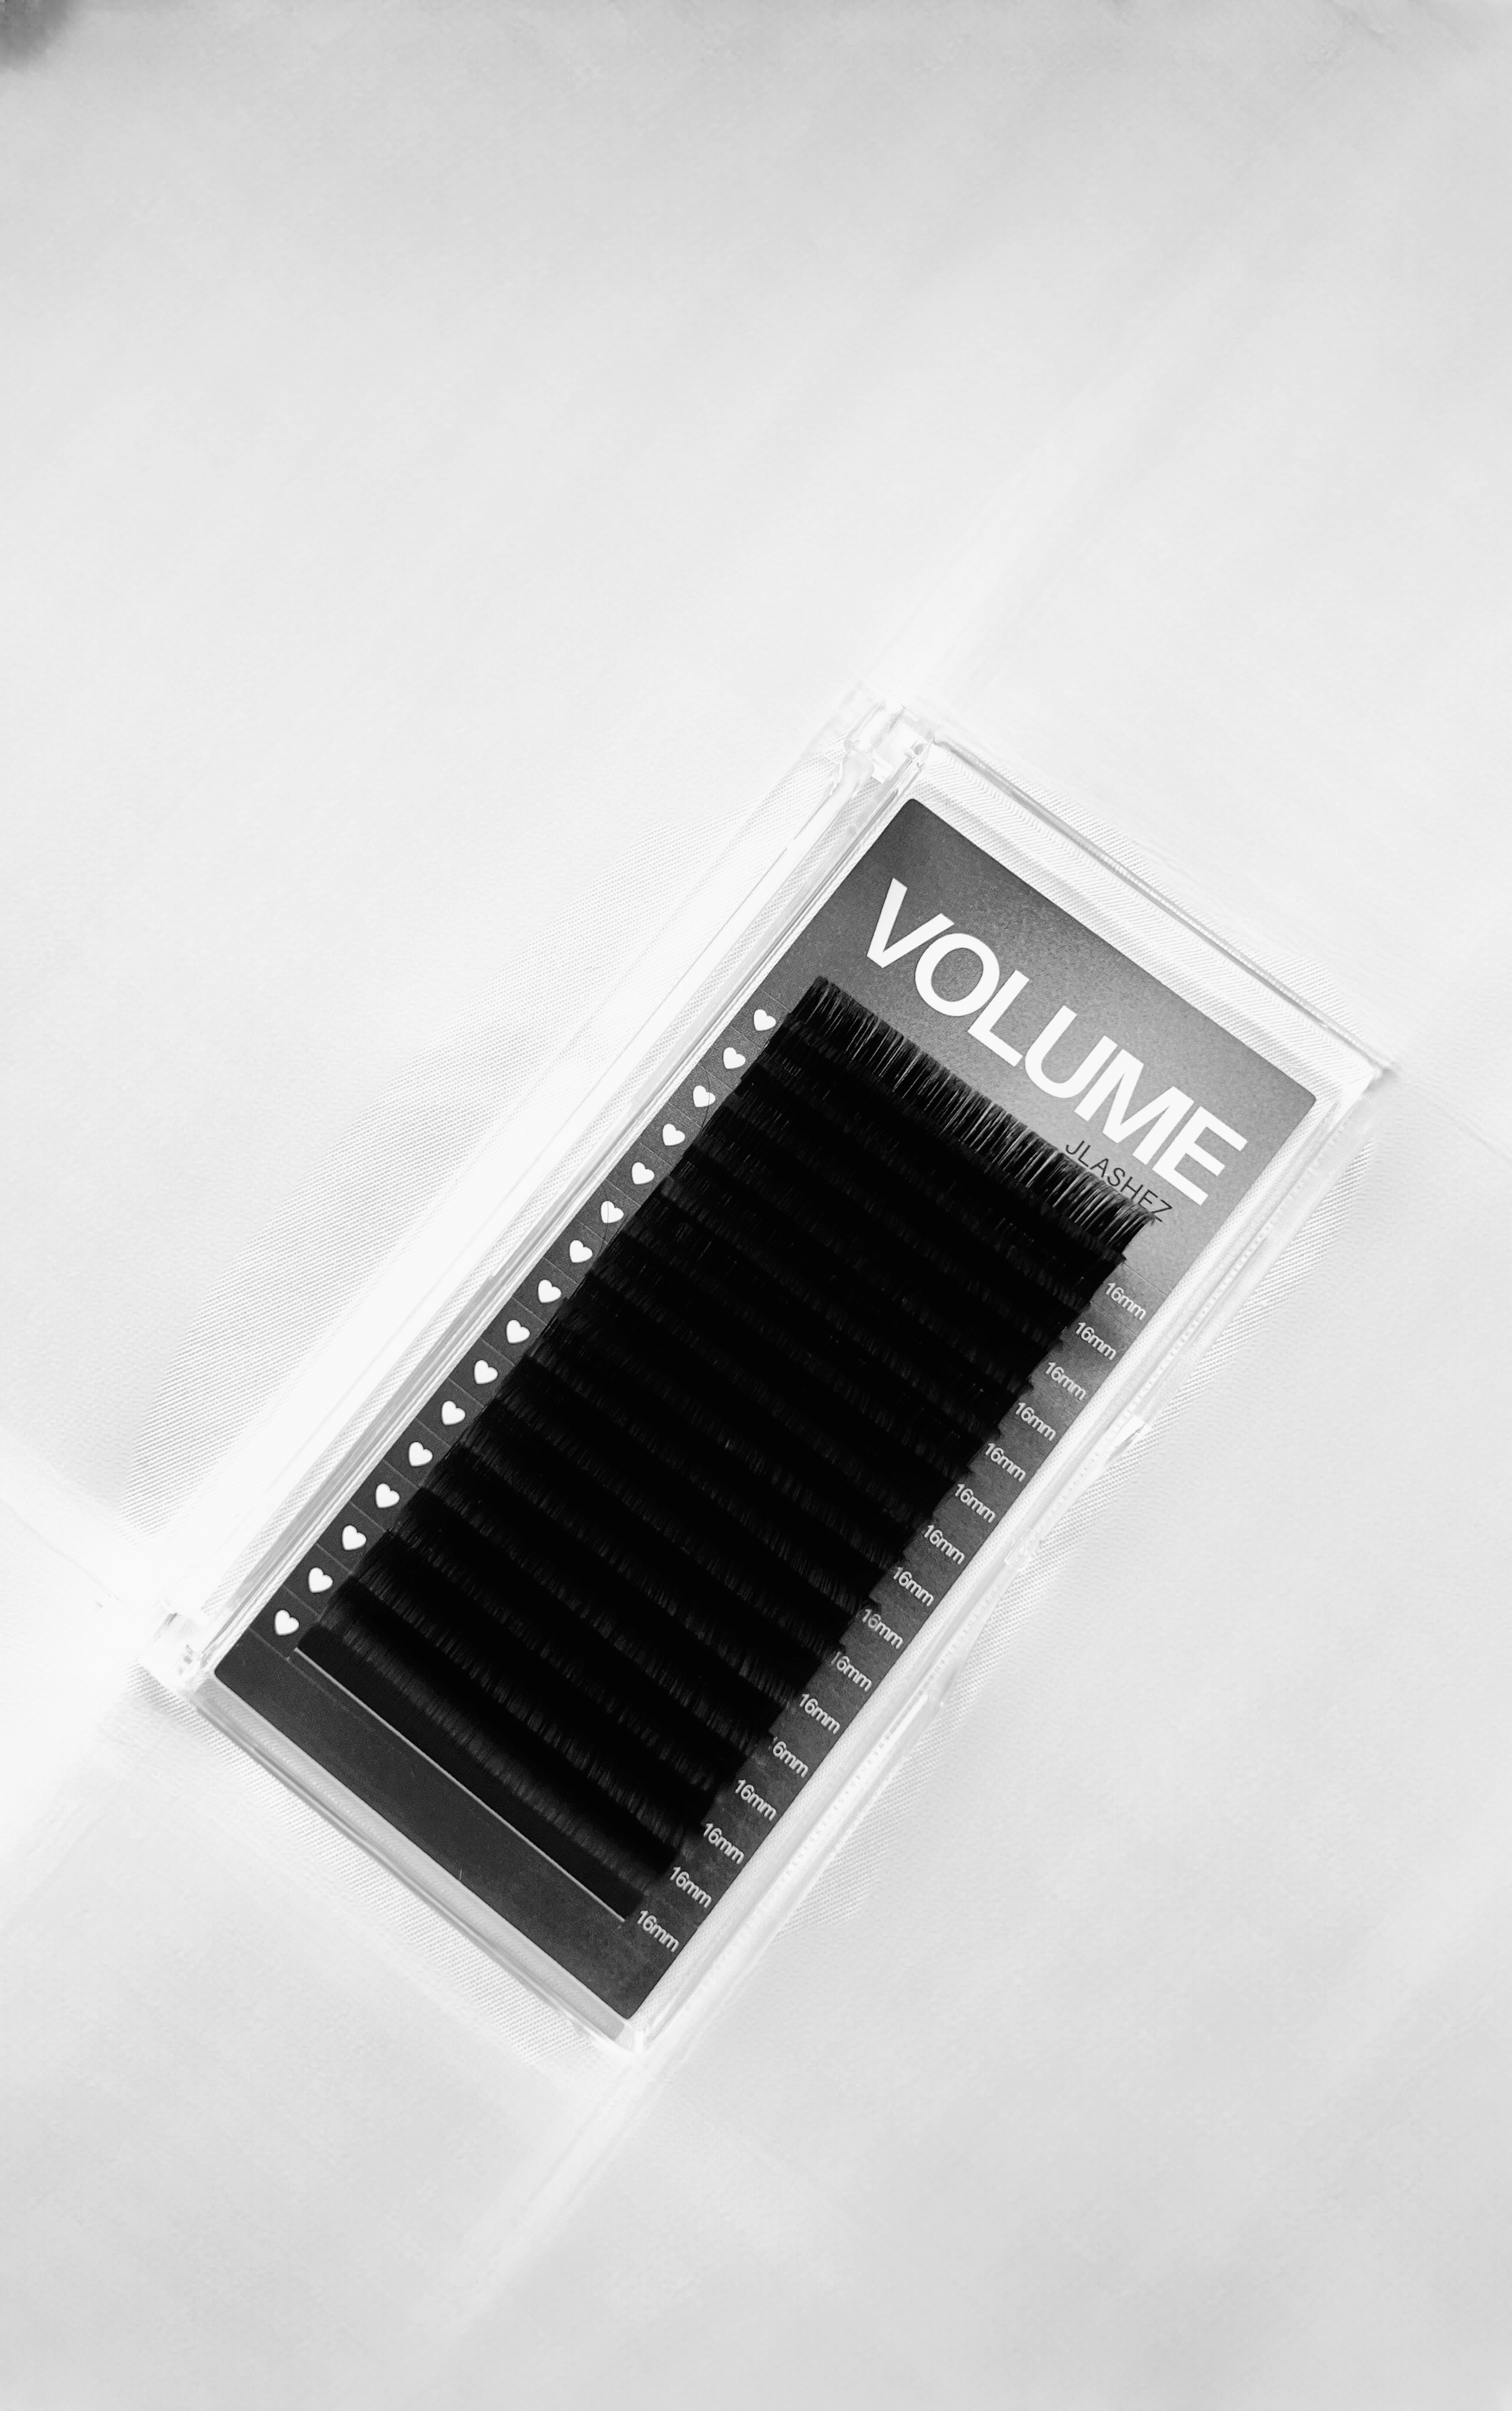 Volume mix trays